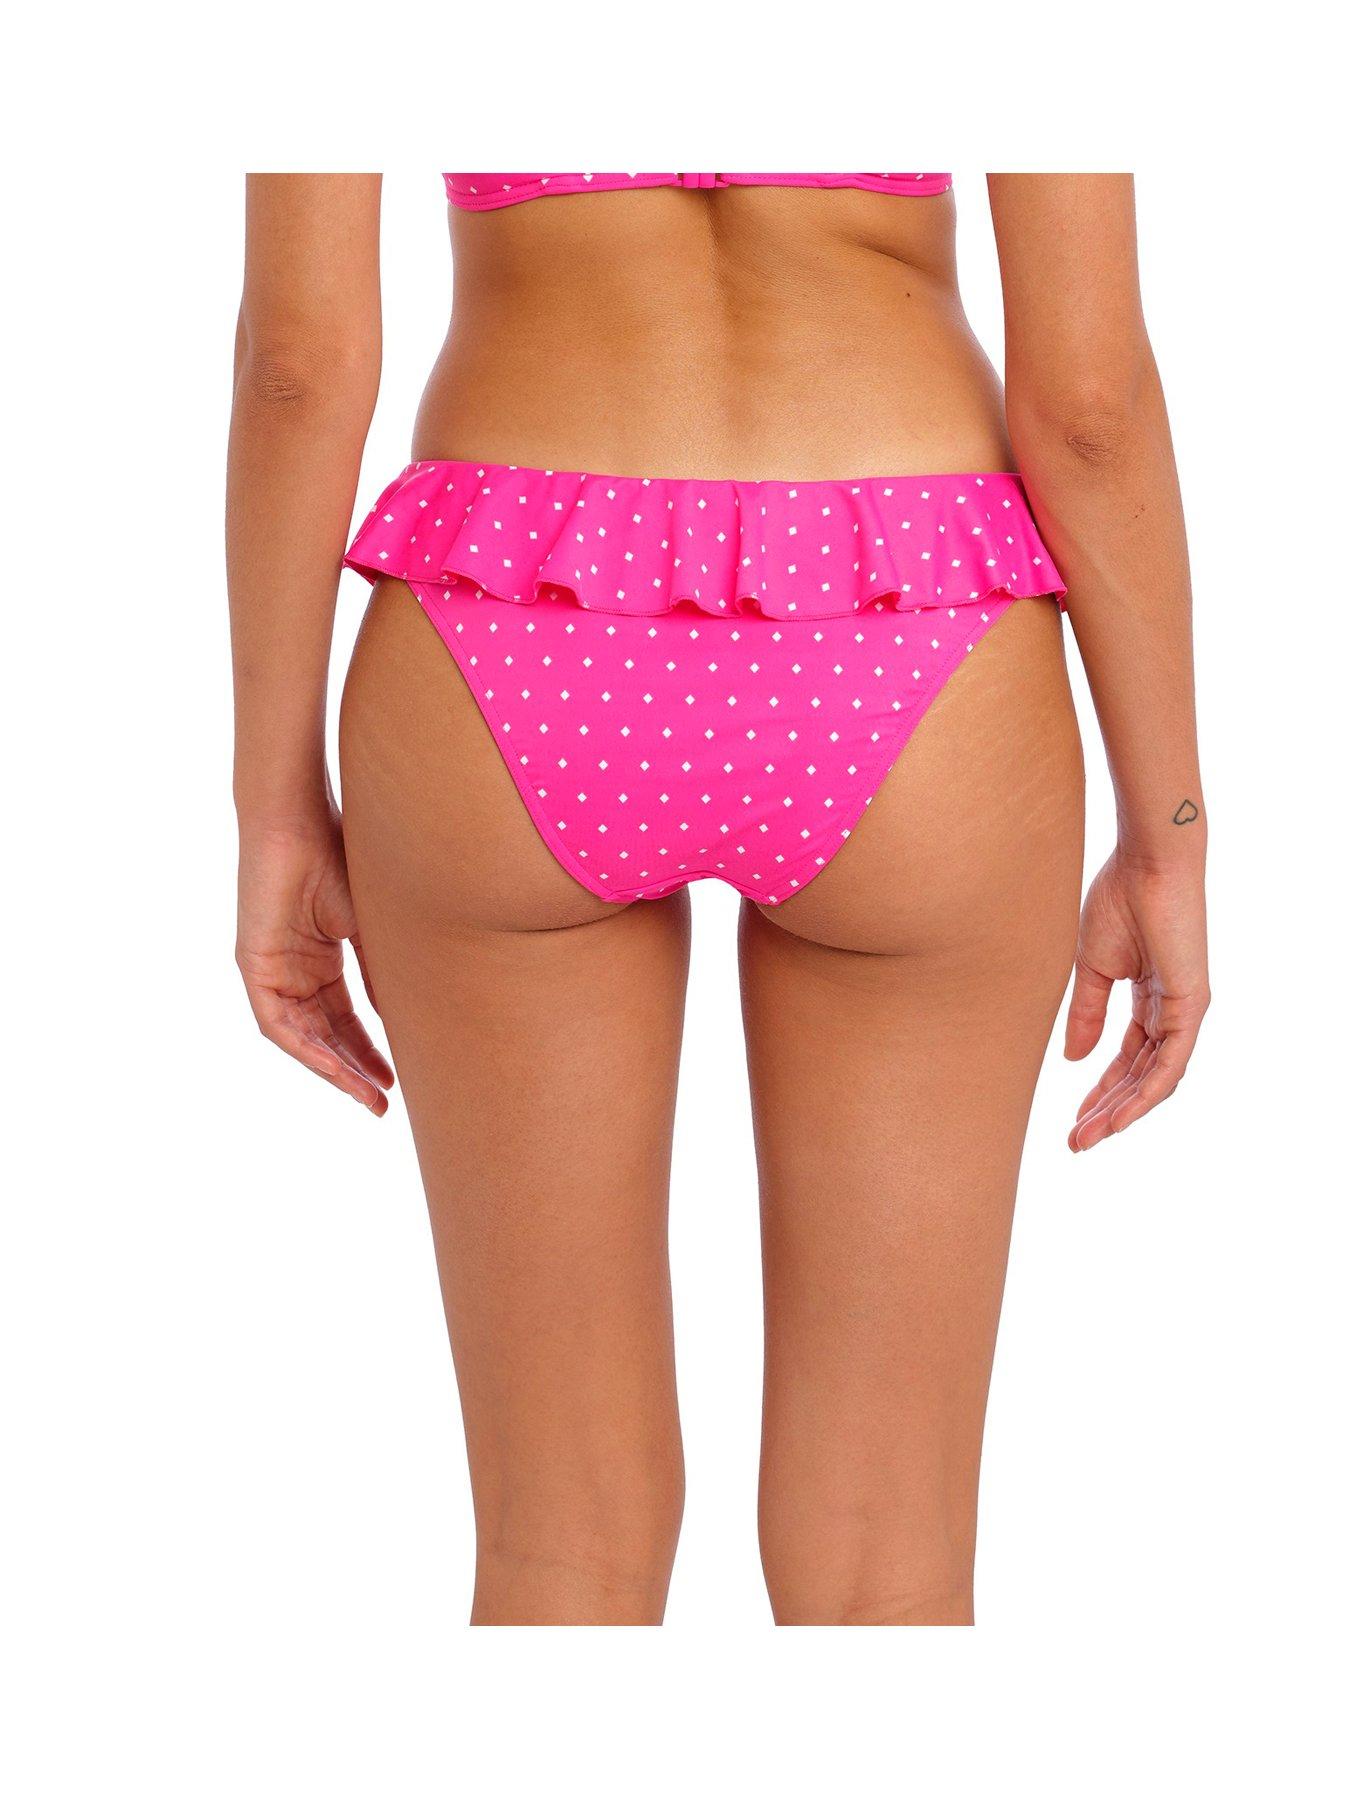 Ivory Rose Ivory Rose CURVE scrunch tie side bikini bottom in bright pink